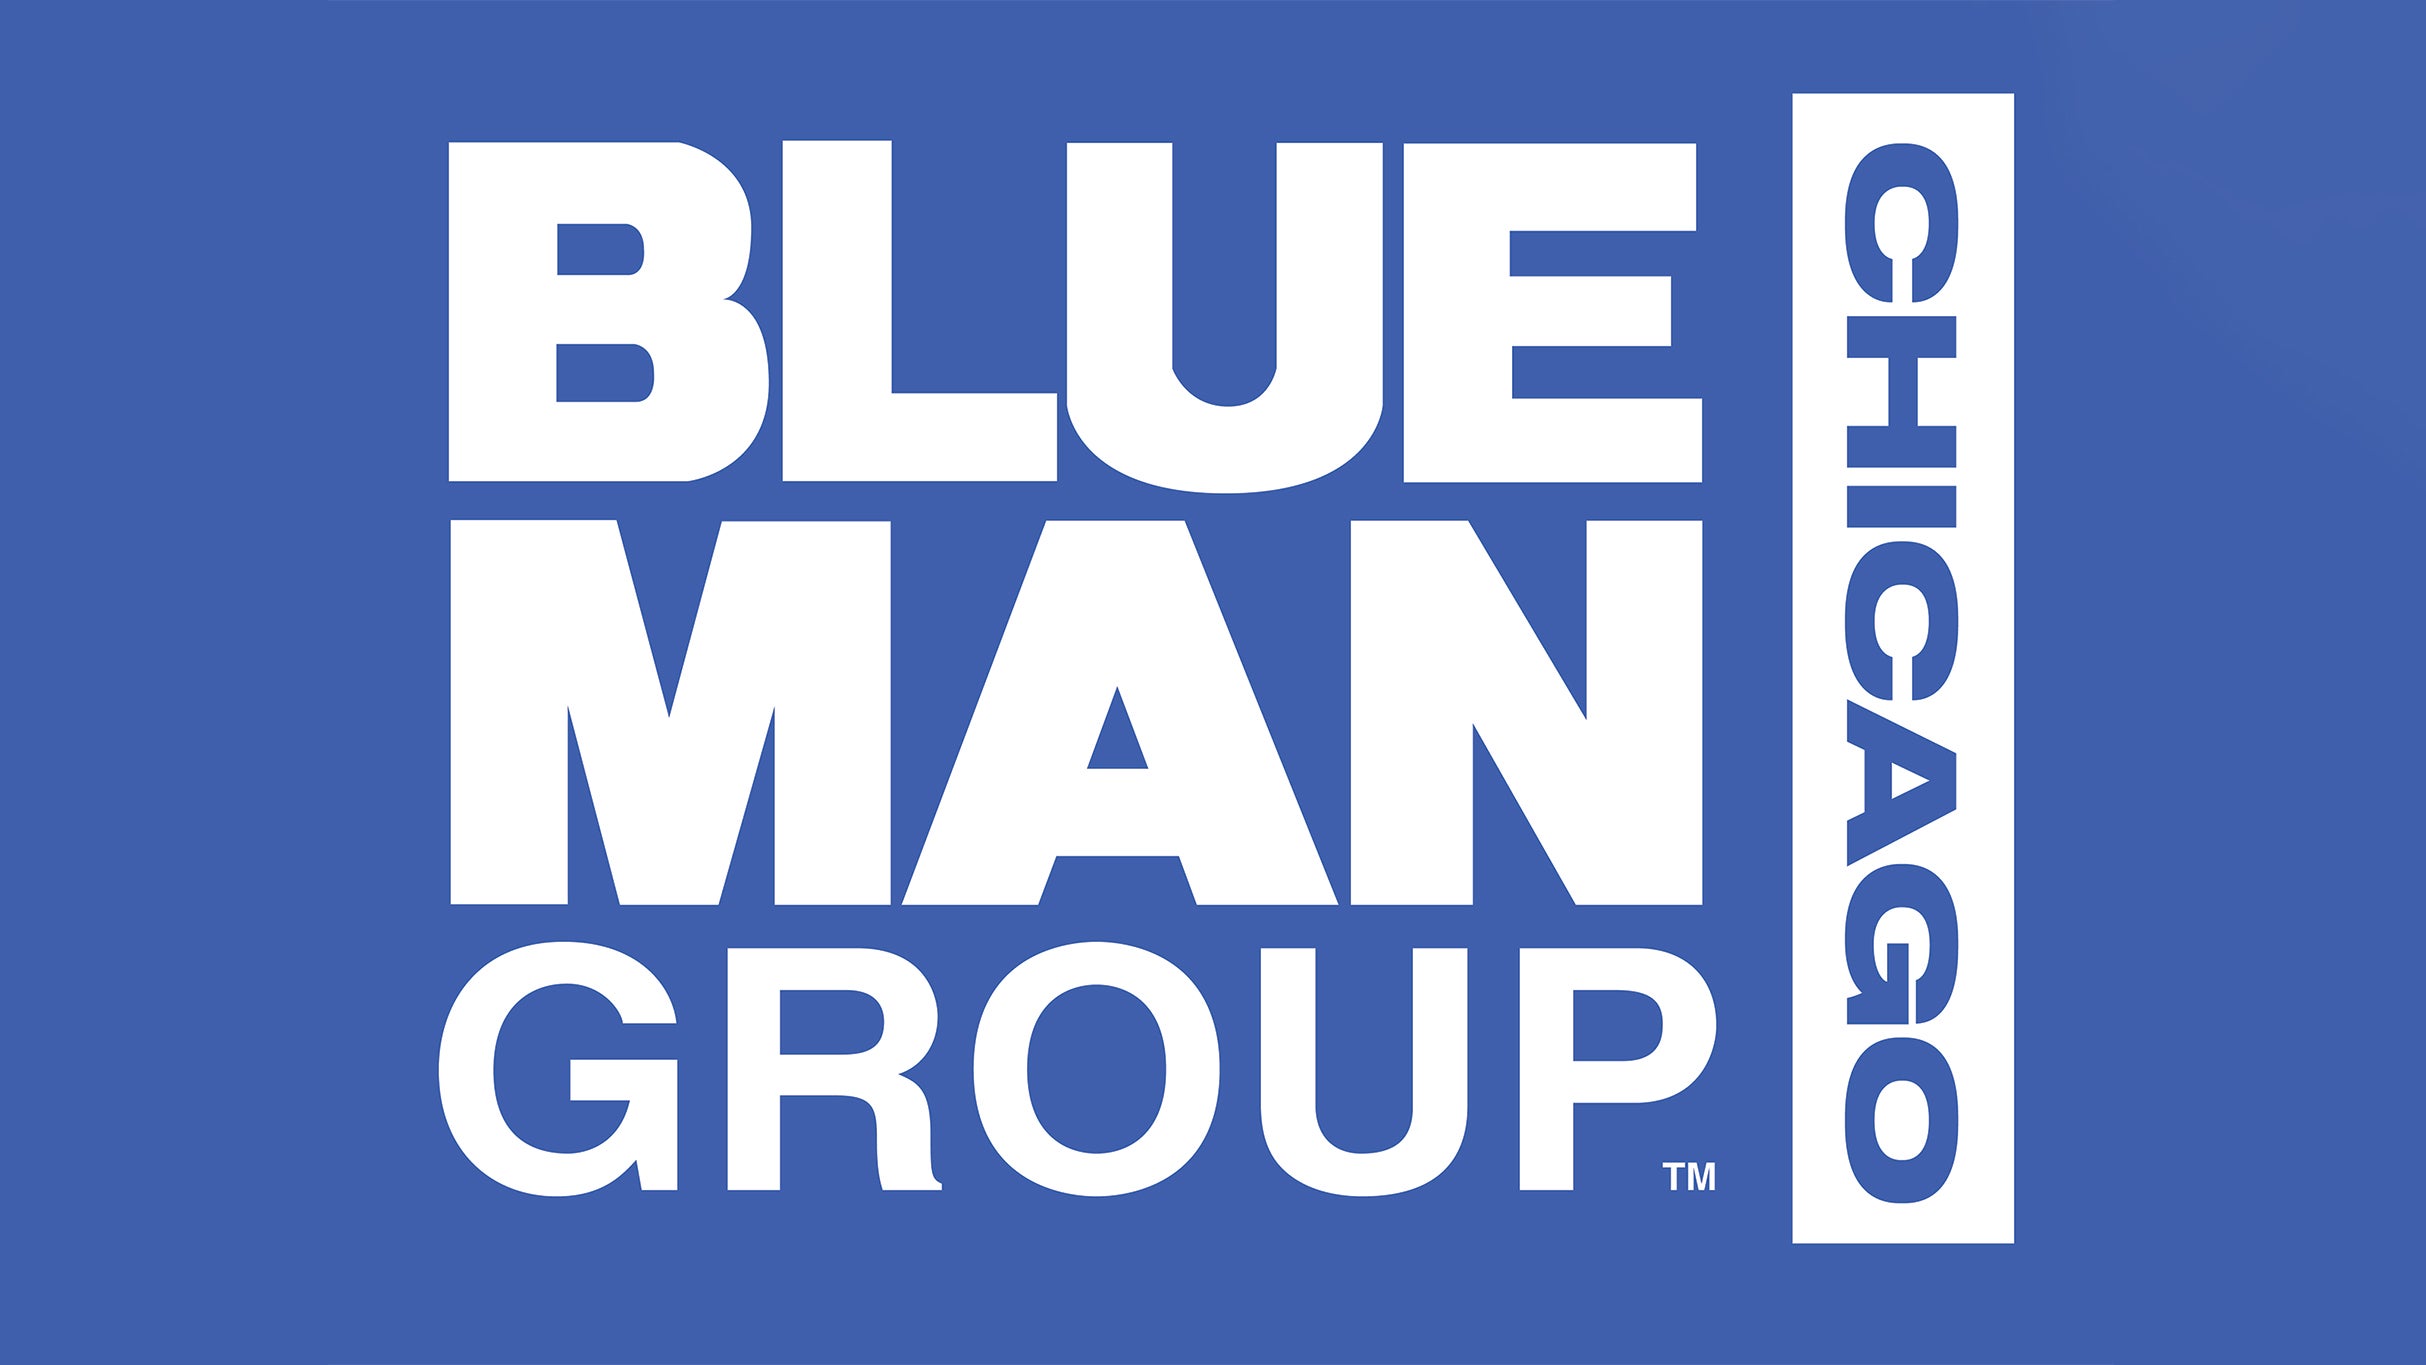 Blue Man Group Chicago at Briar Street Theatre